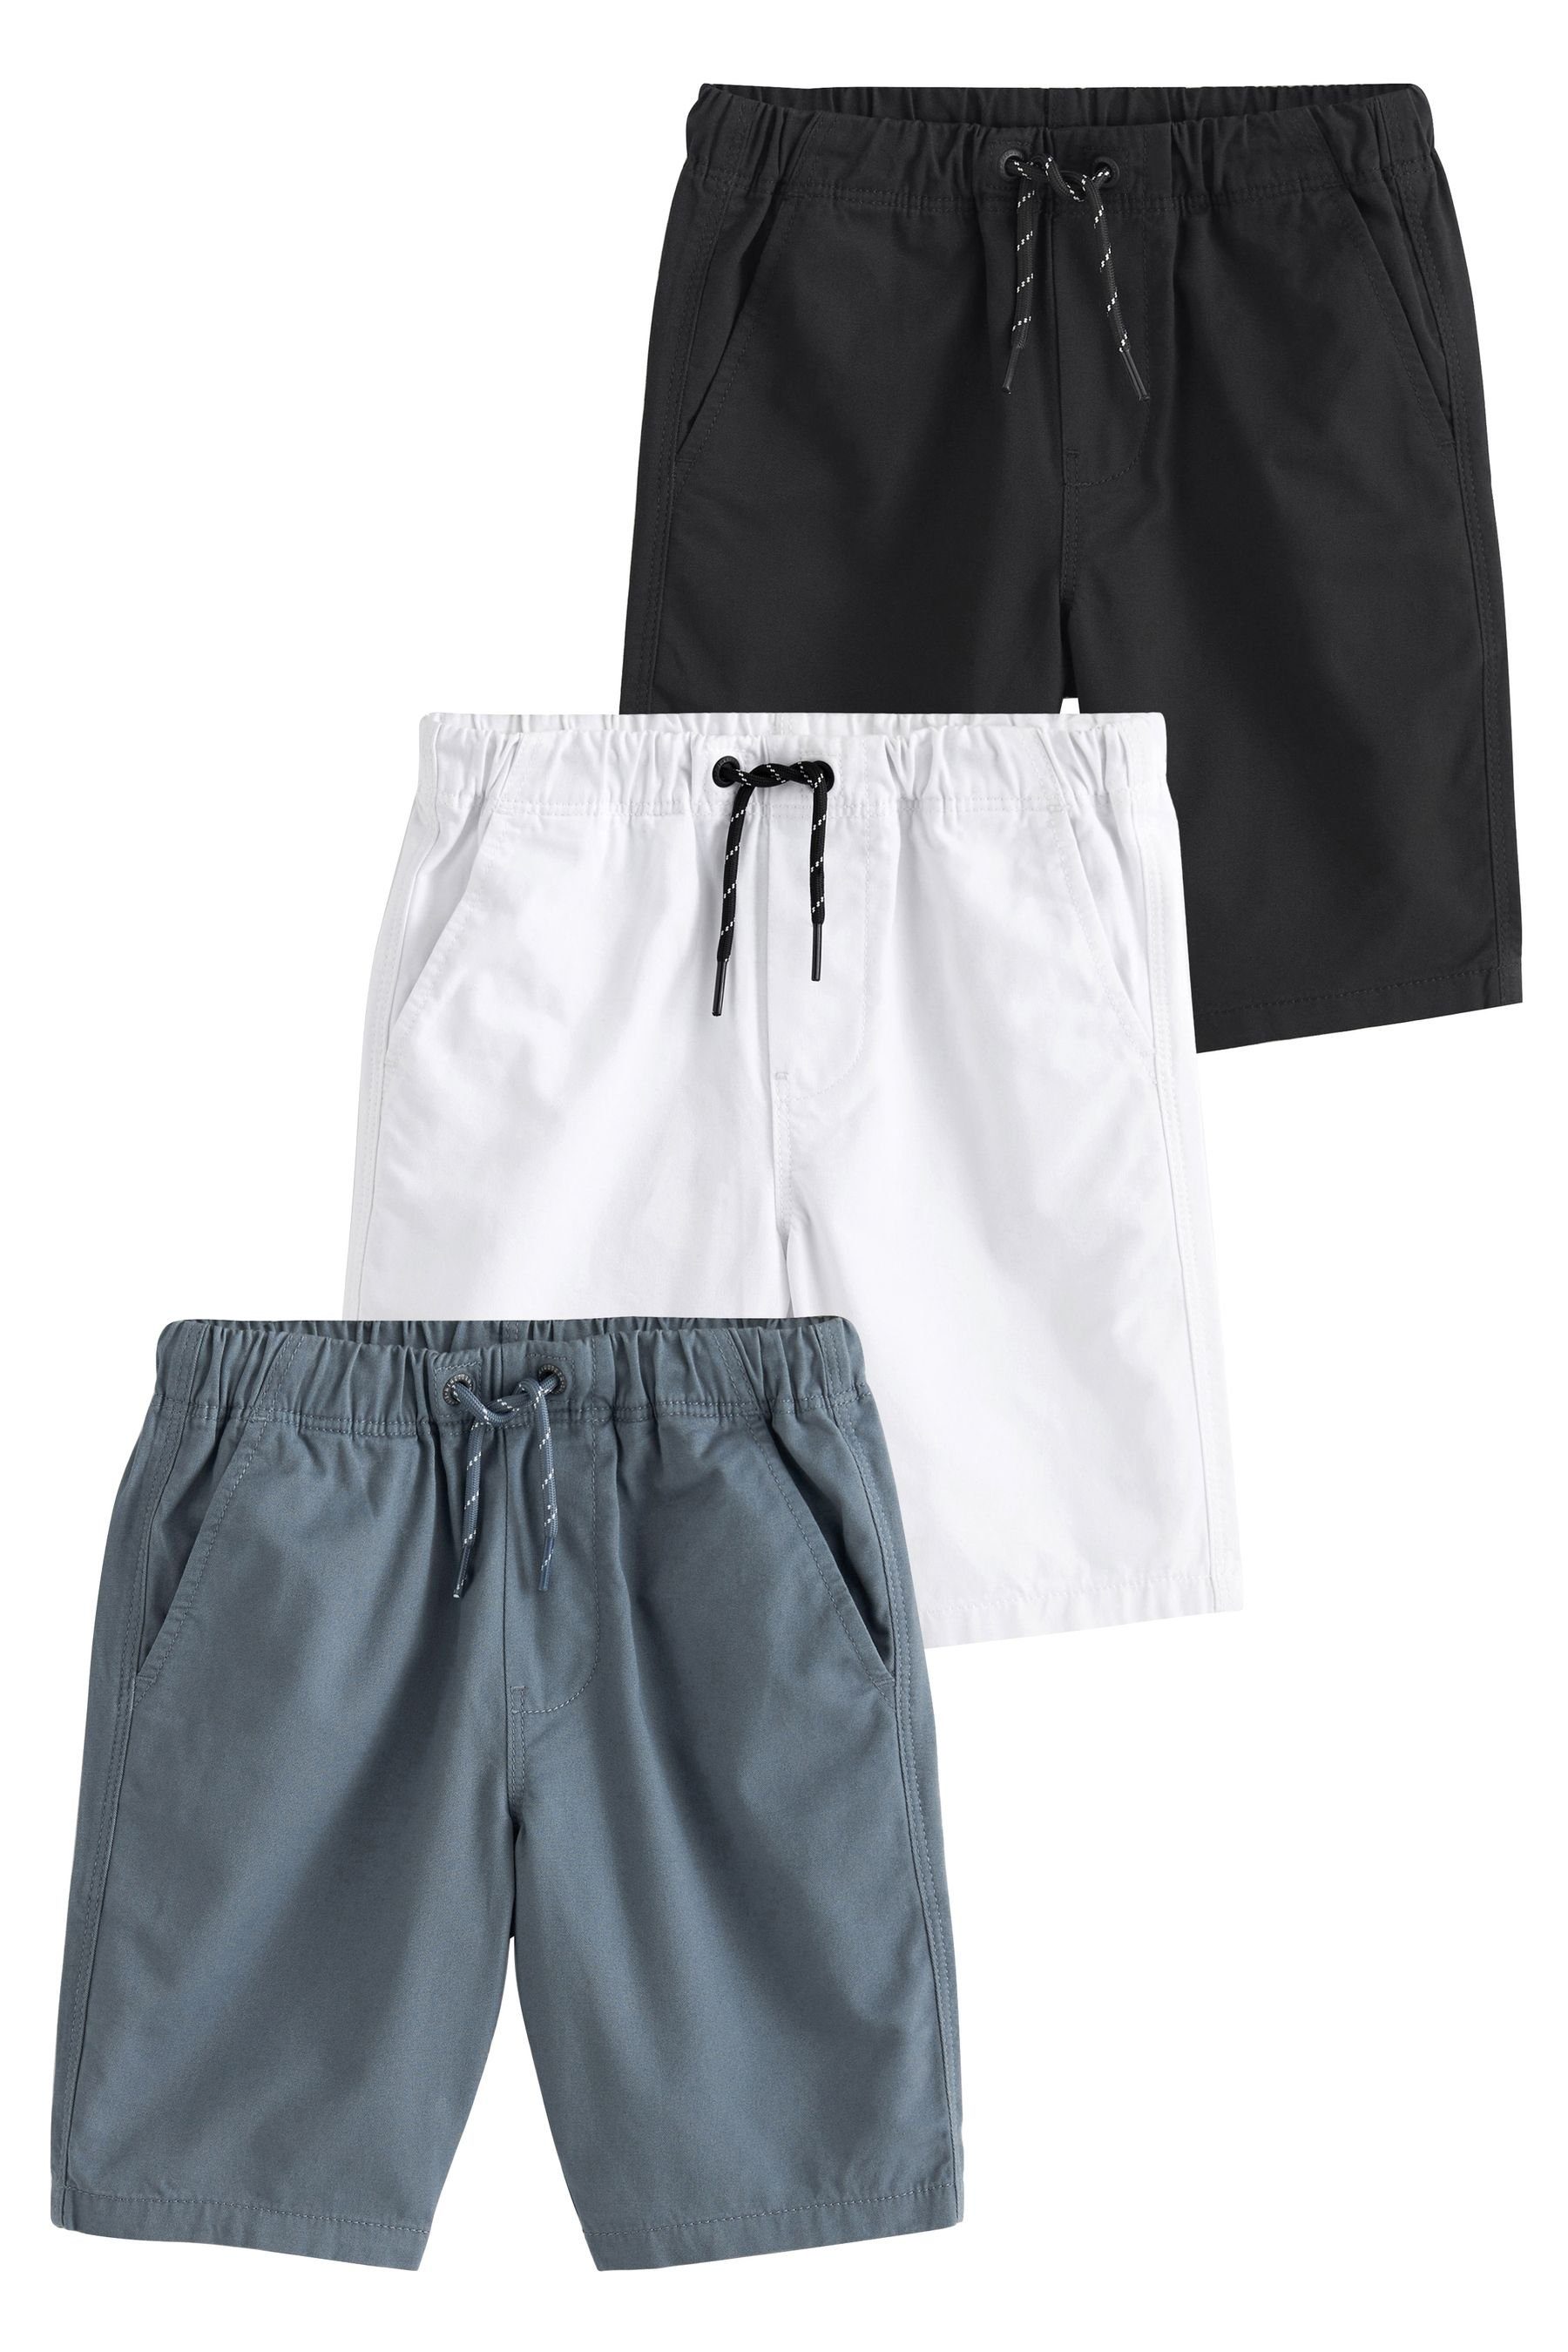 3er-Pack Black/White Shorts Next Schlupf-Shorts (3-tlg) im